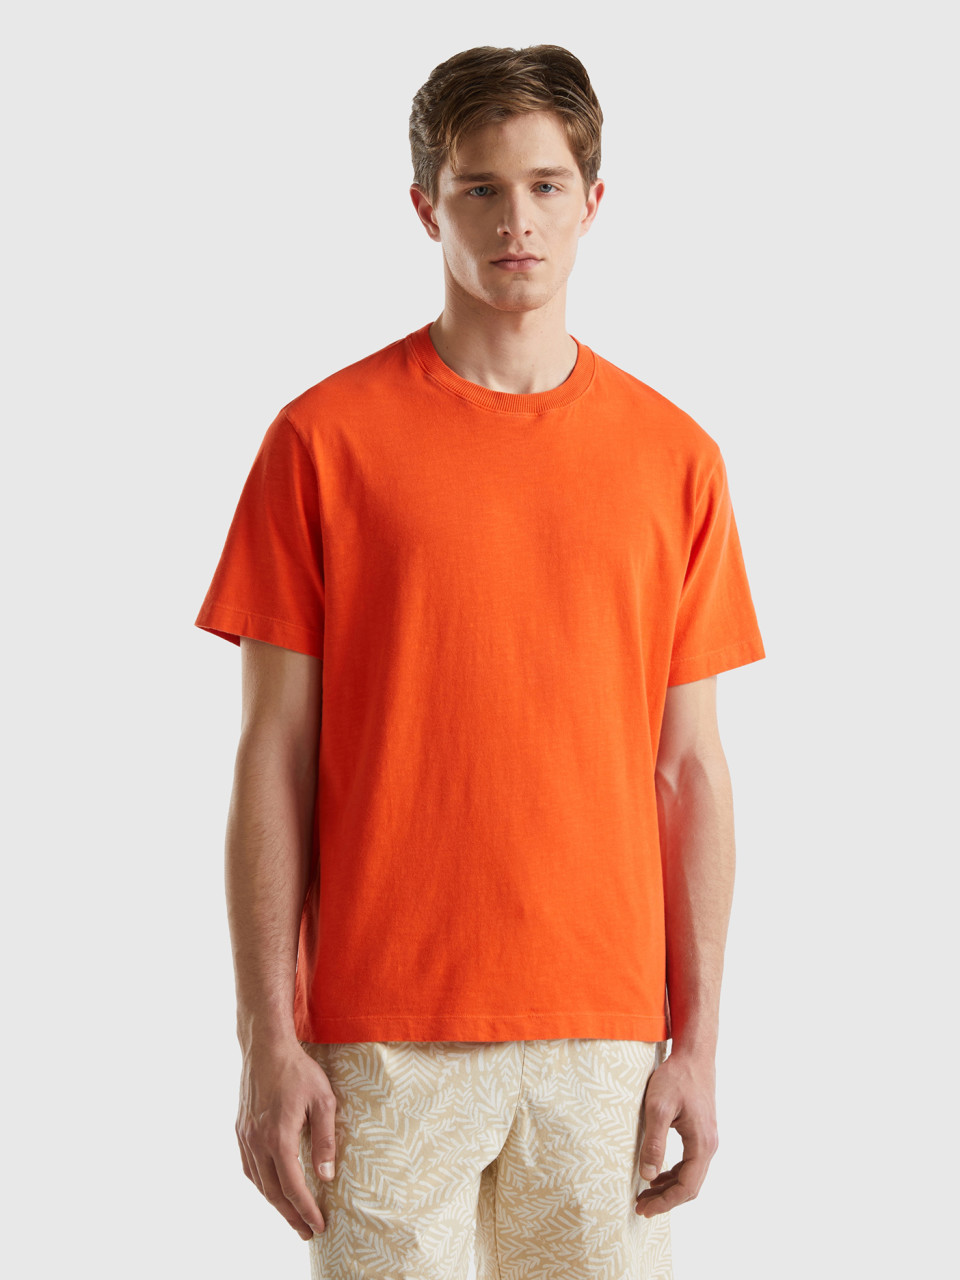 Benetton, T-shirt Leggera Relaxed Fit, Arancione, Uomo